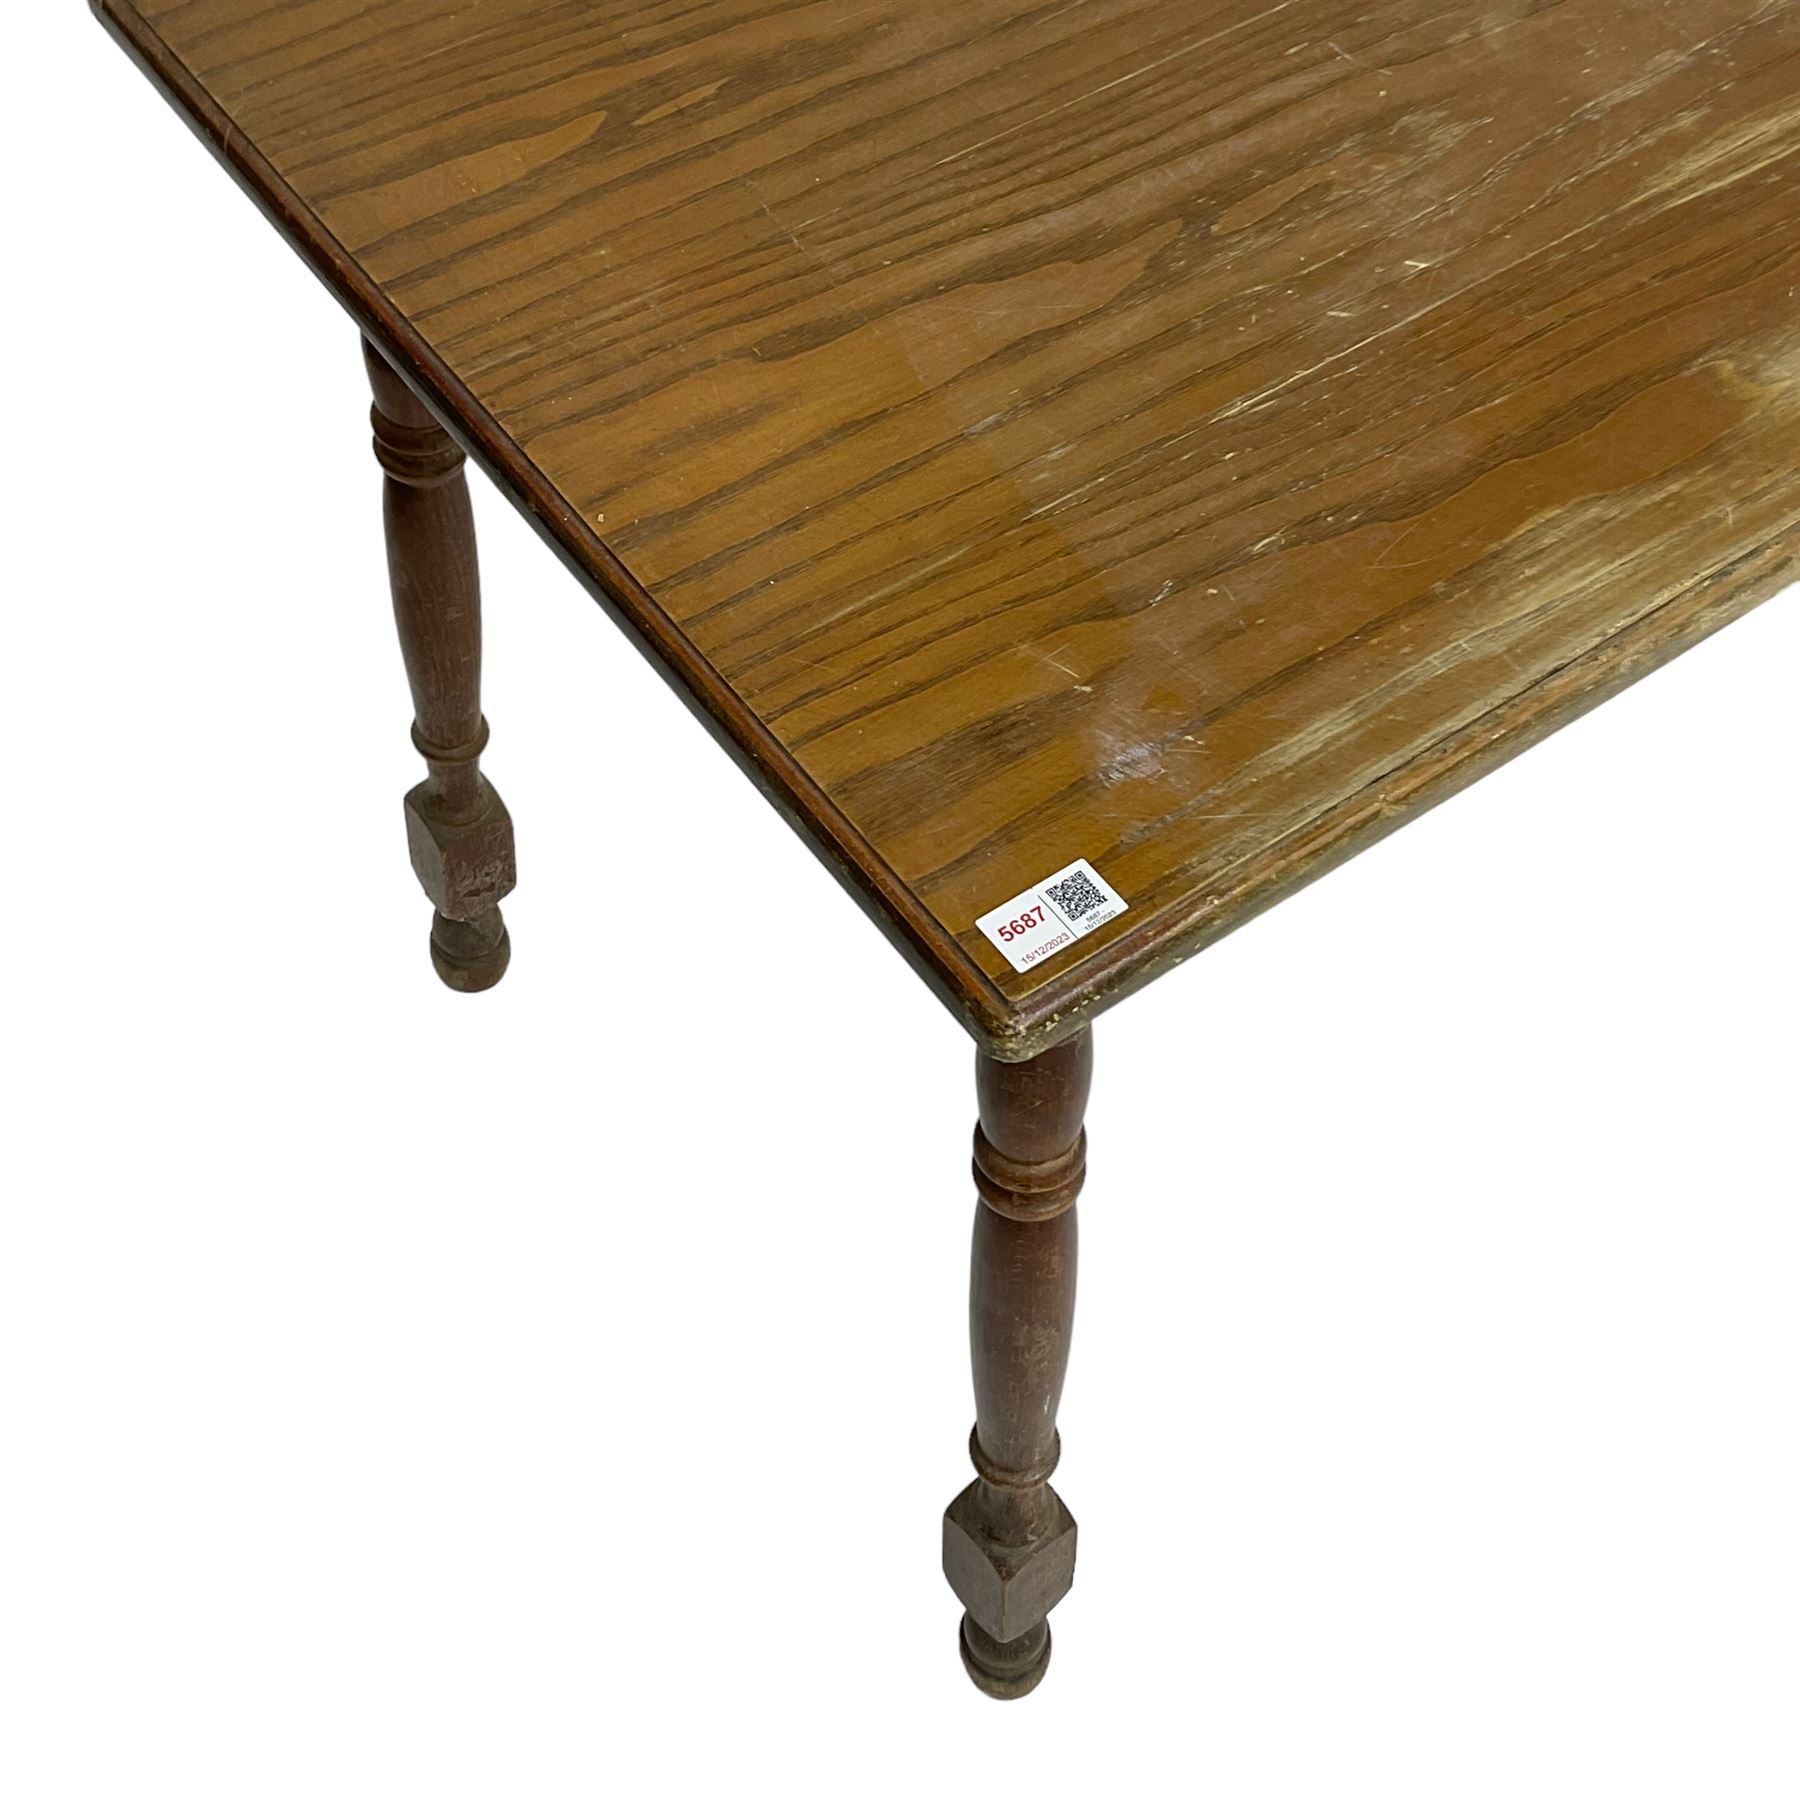 20th century oak table - Image 3 of 4